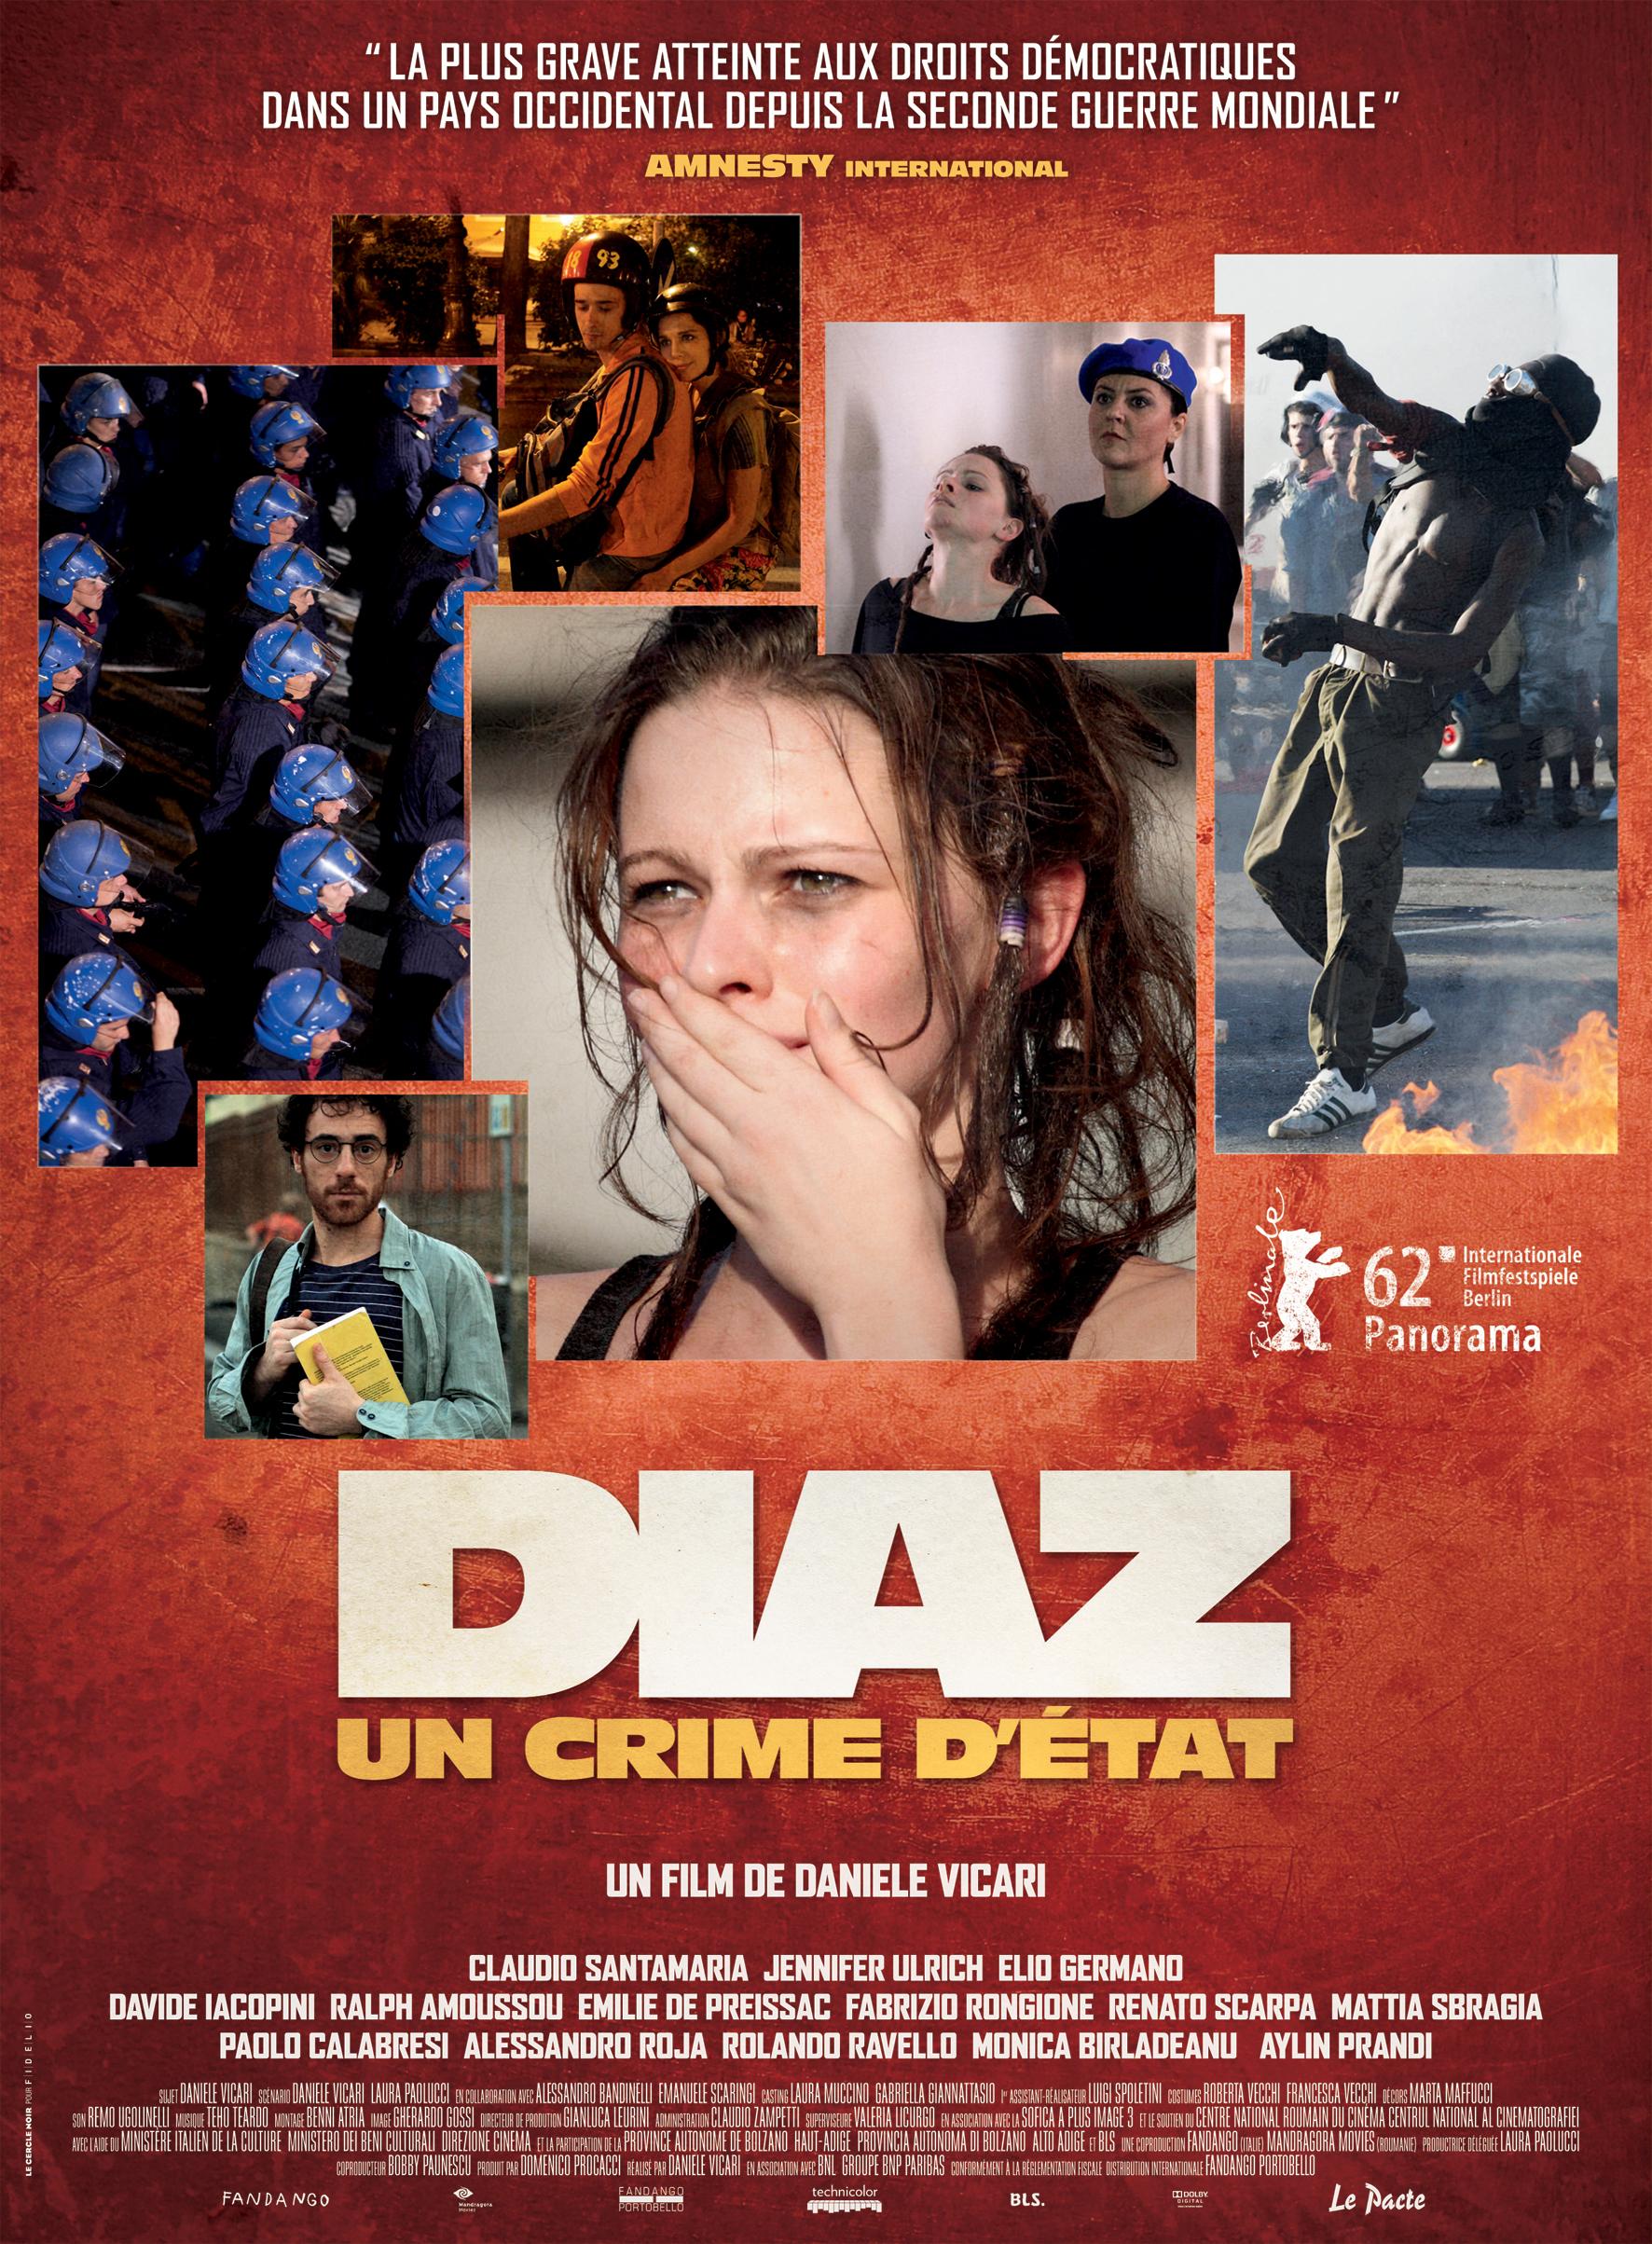 Постер фильма Школа Диаз | Diaz: Don't Clean Up This Blood